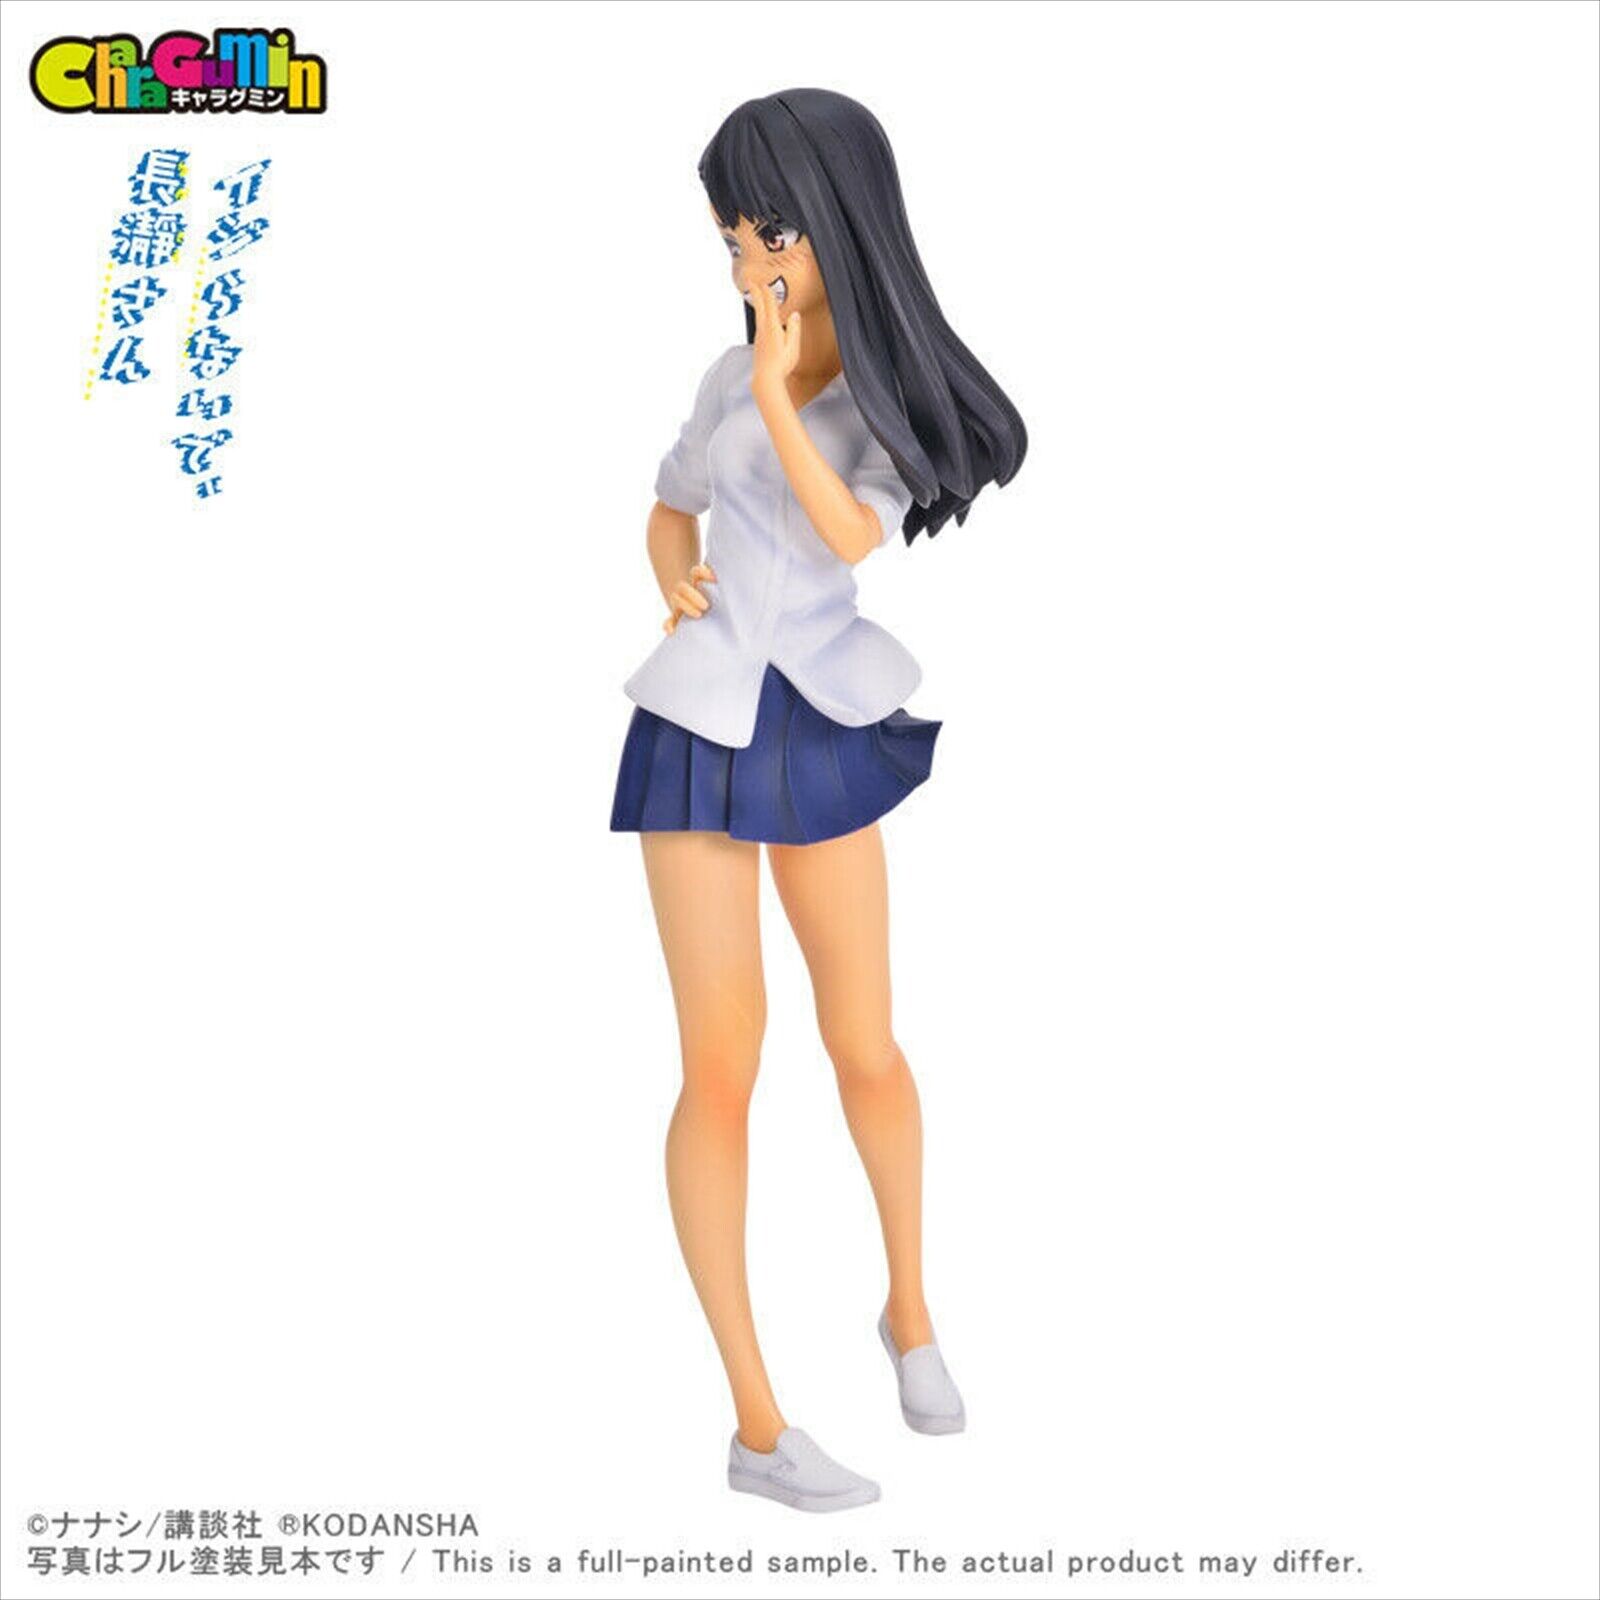 Charagumin non Nagatoro san school costume figure build kit H14.8cm manime manga